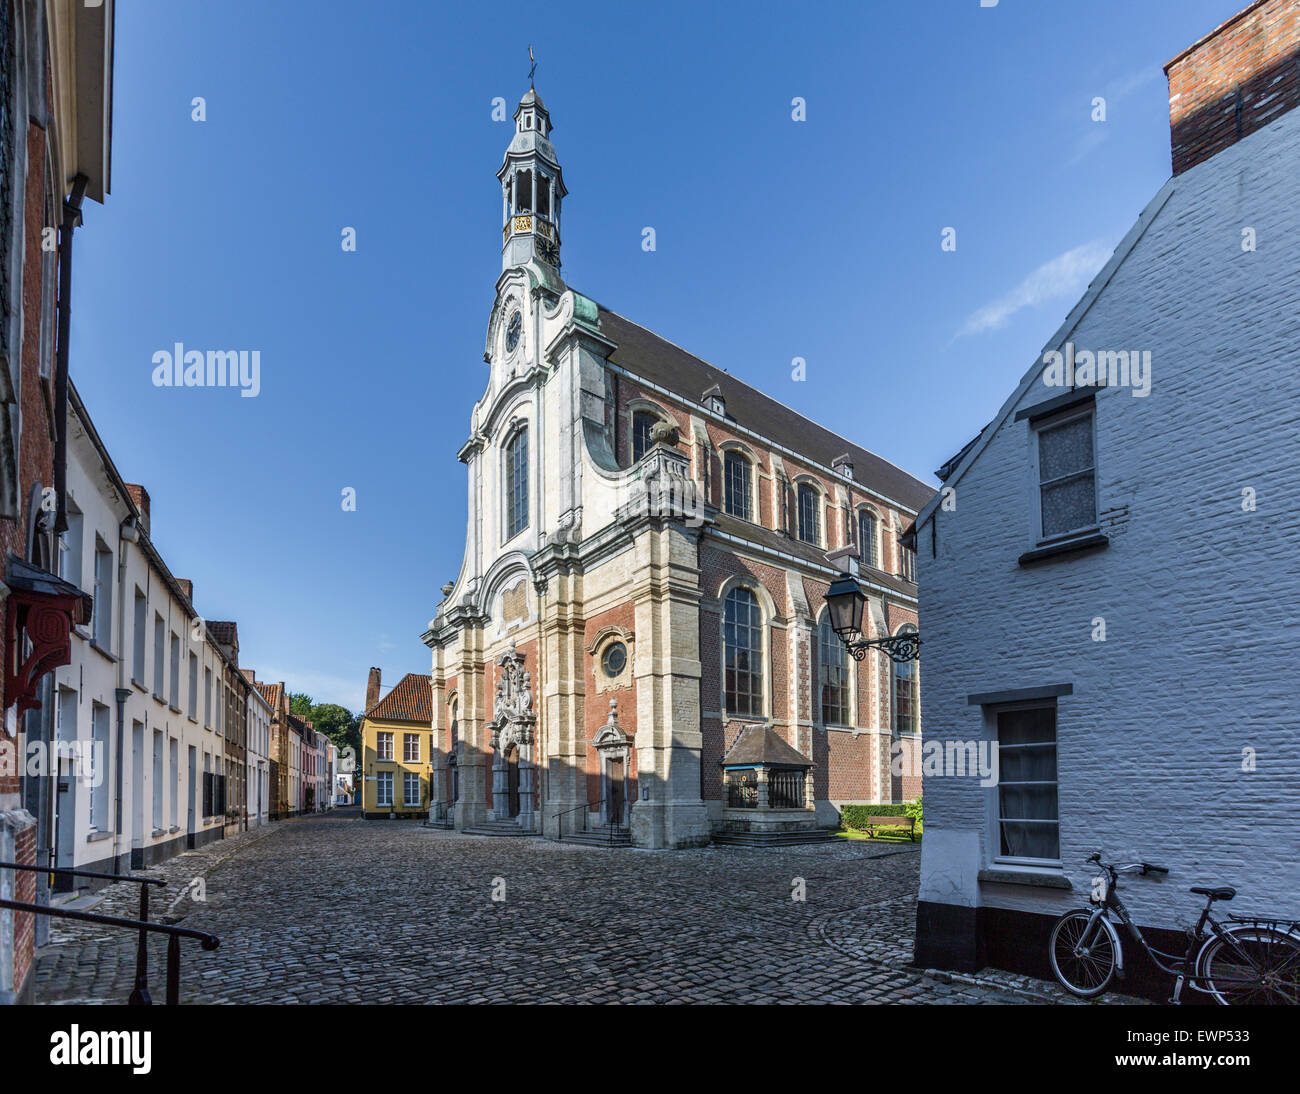 St. Margaret's Church, Beguinage, Lier, Belgium Stock Photo